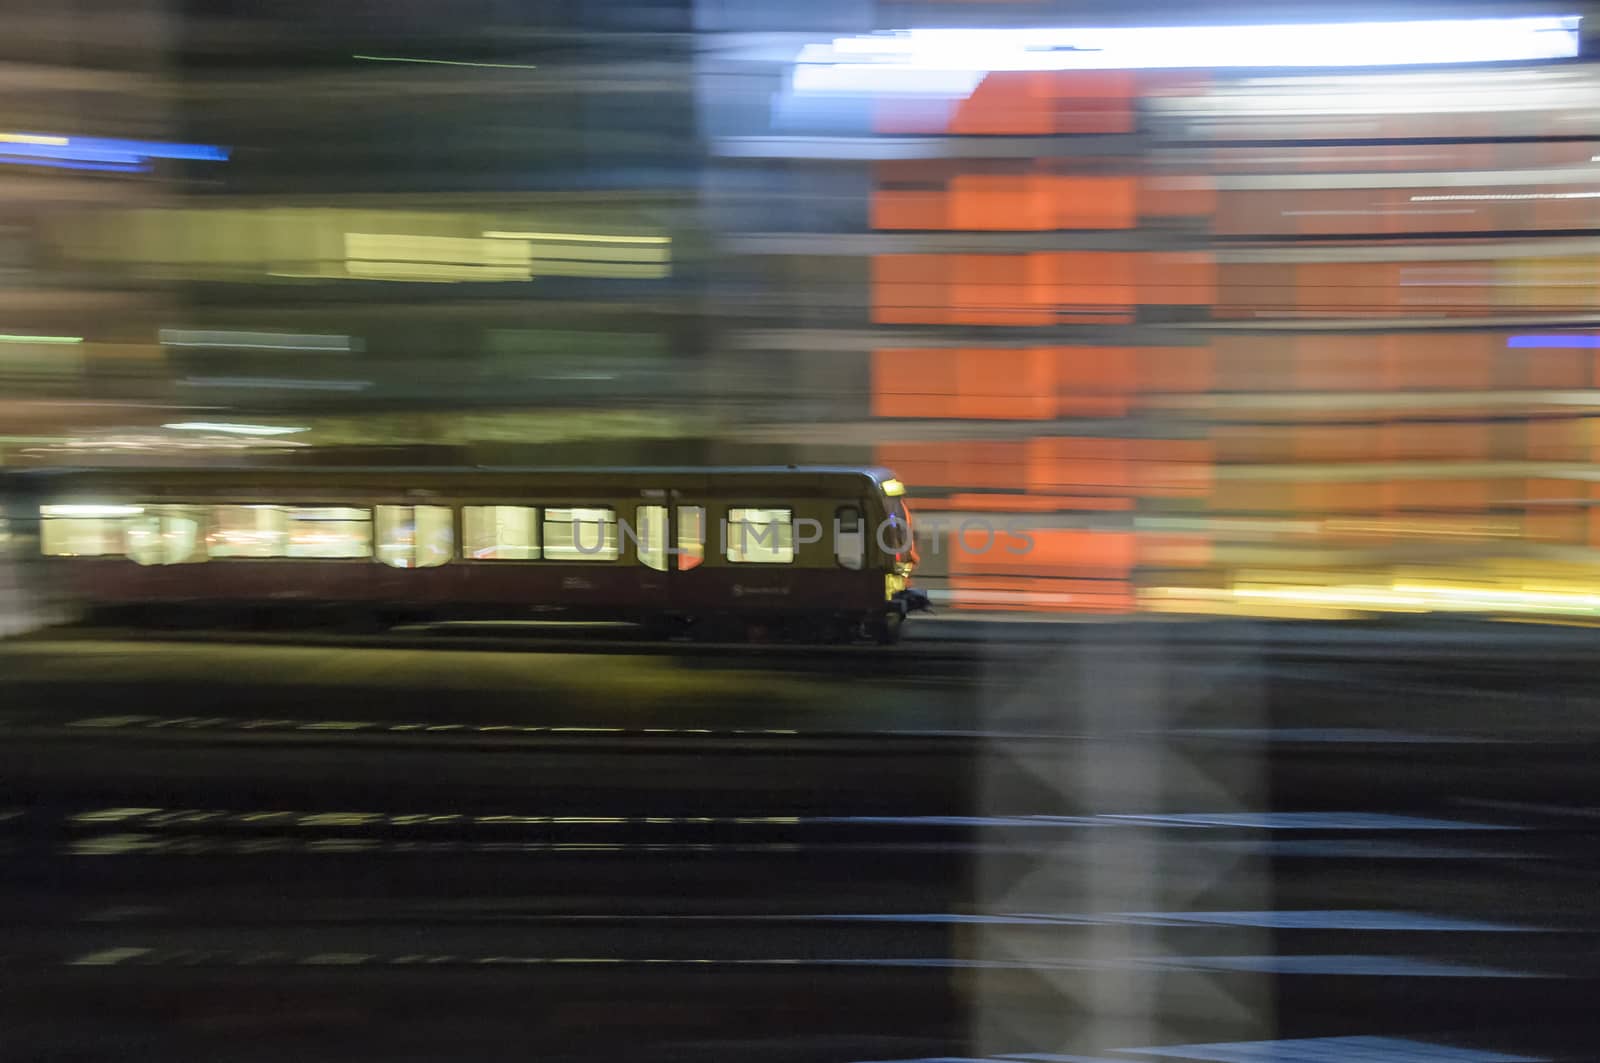 Speeding train at night by asafaric